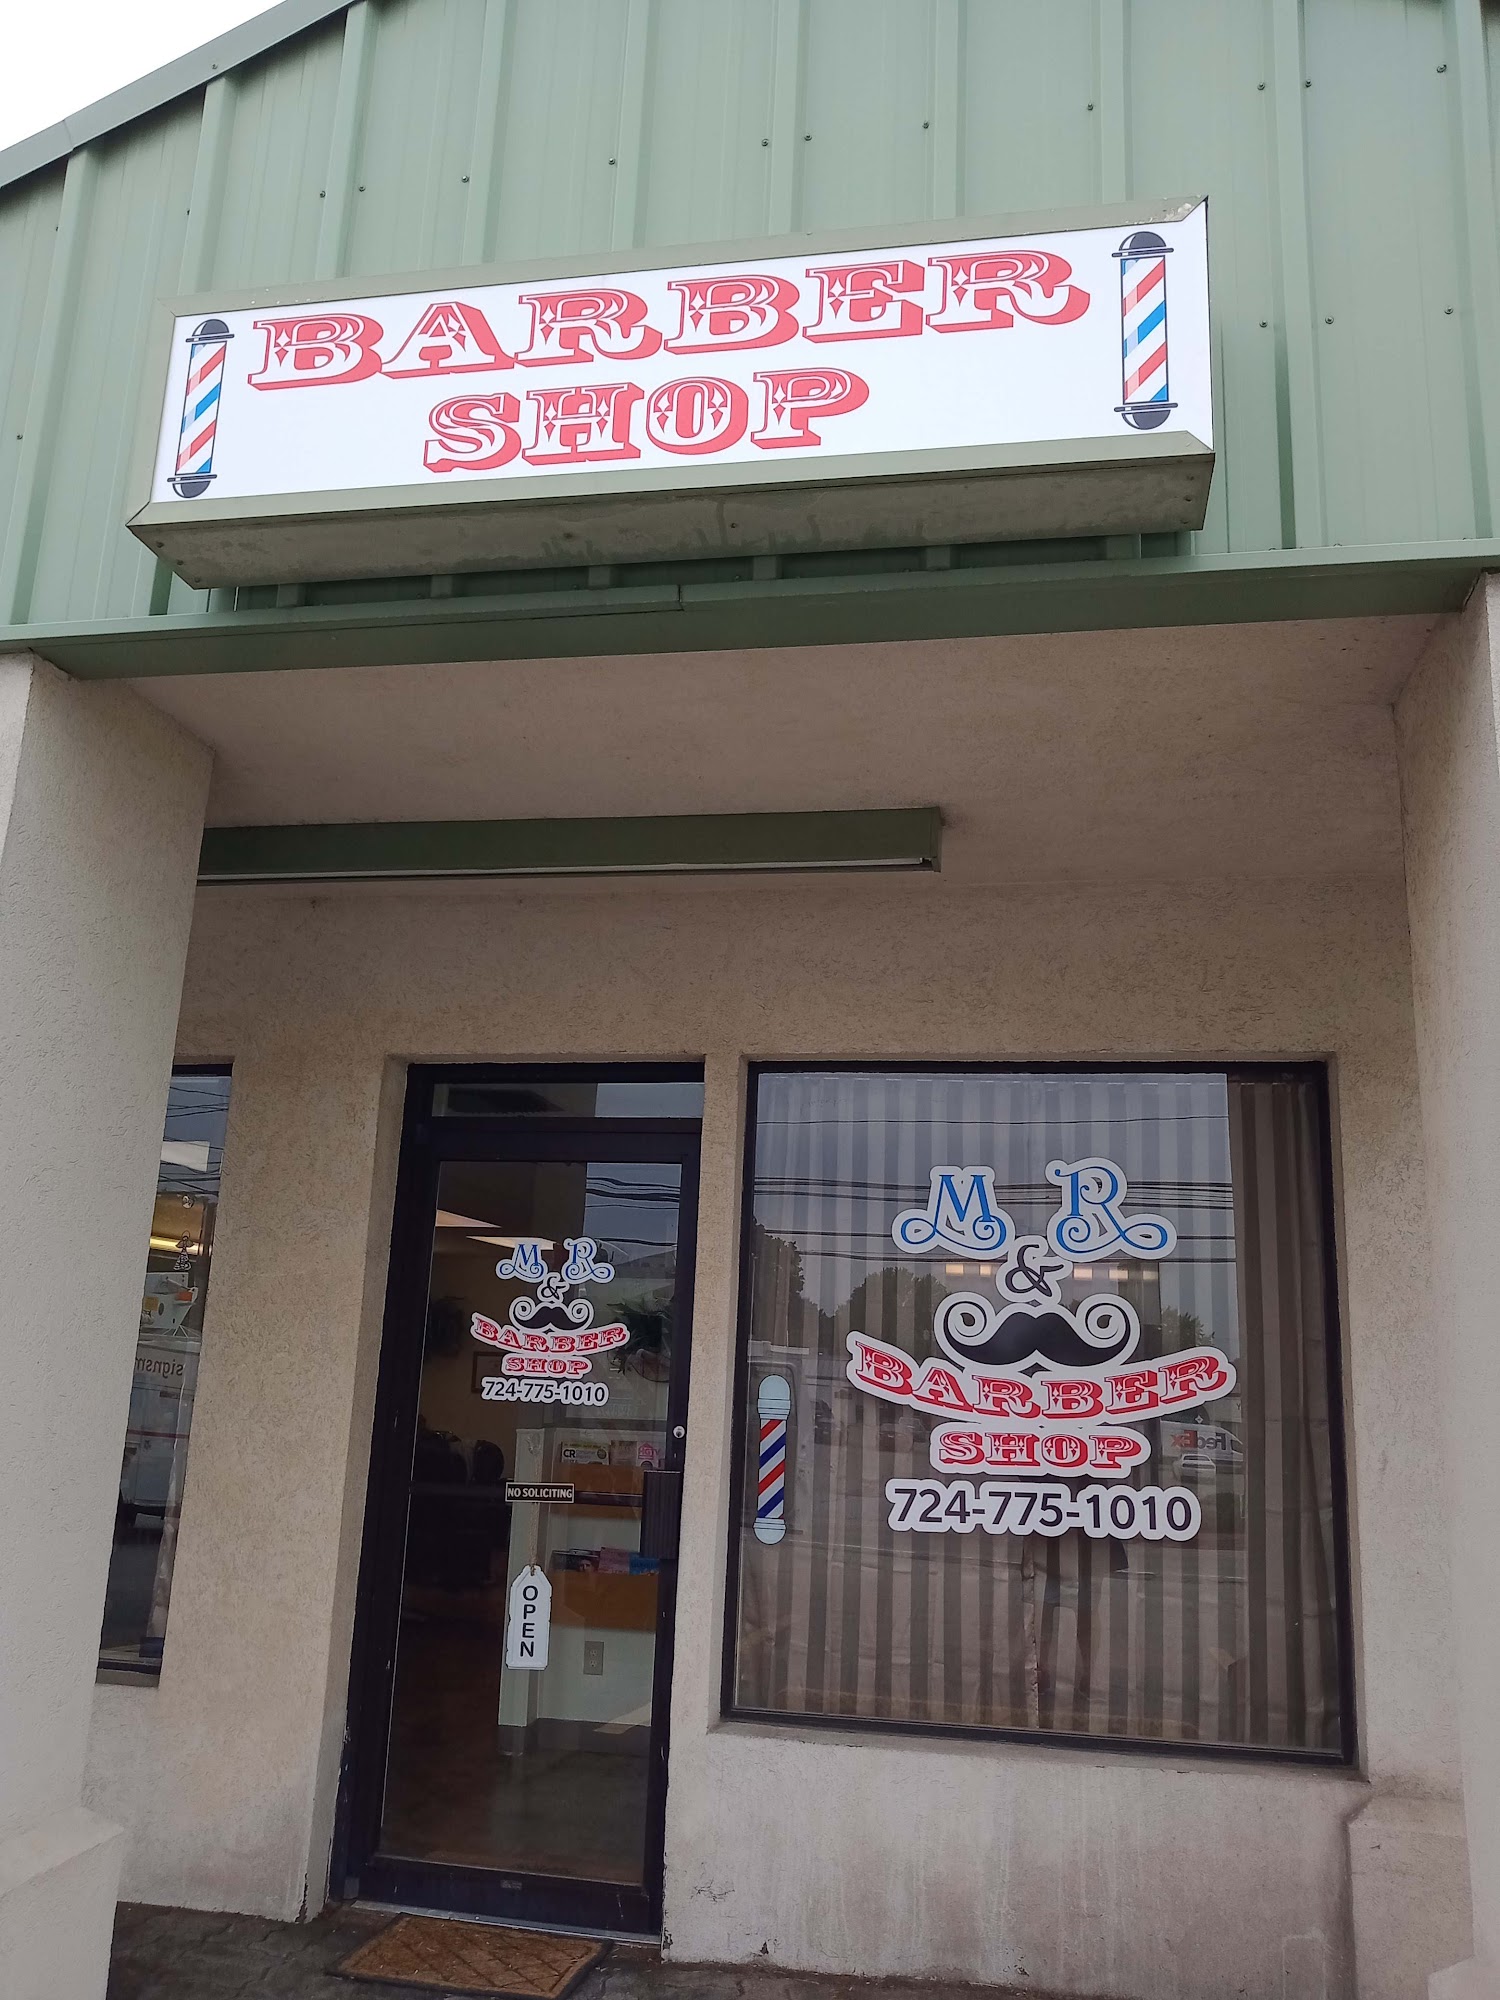 M & R Barber Shop 3465 Brodhead Rd #1, Monaca Pennsylvania 15061